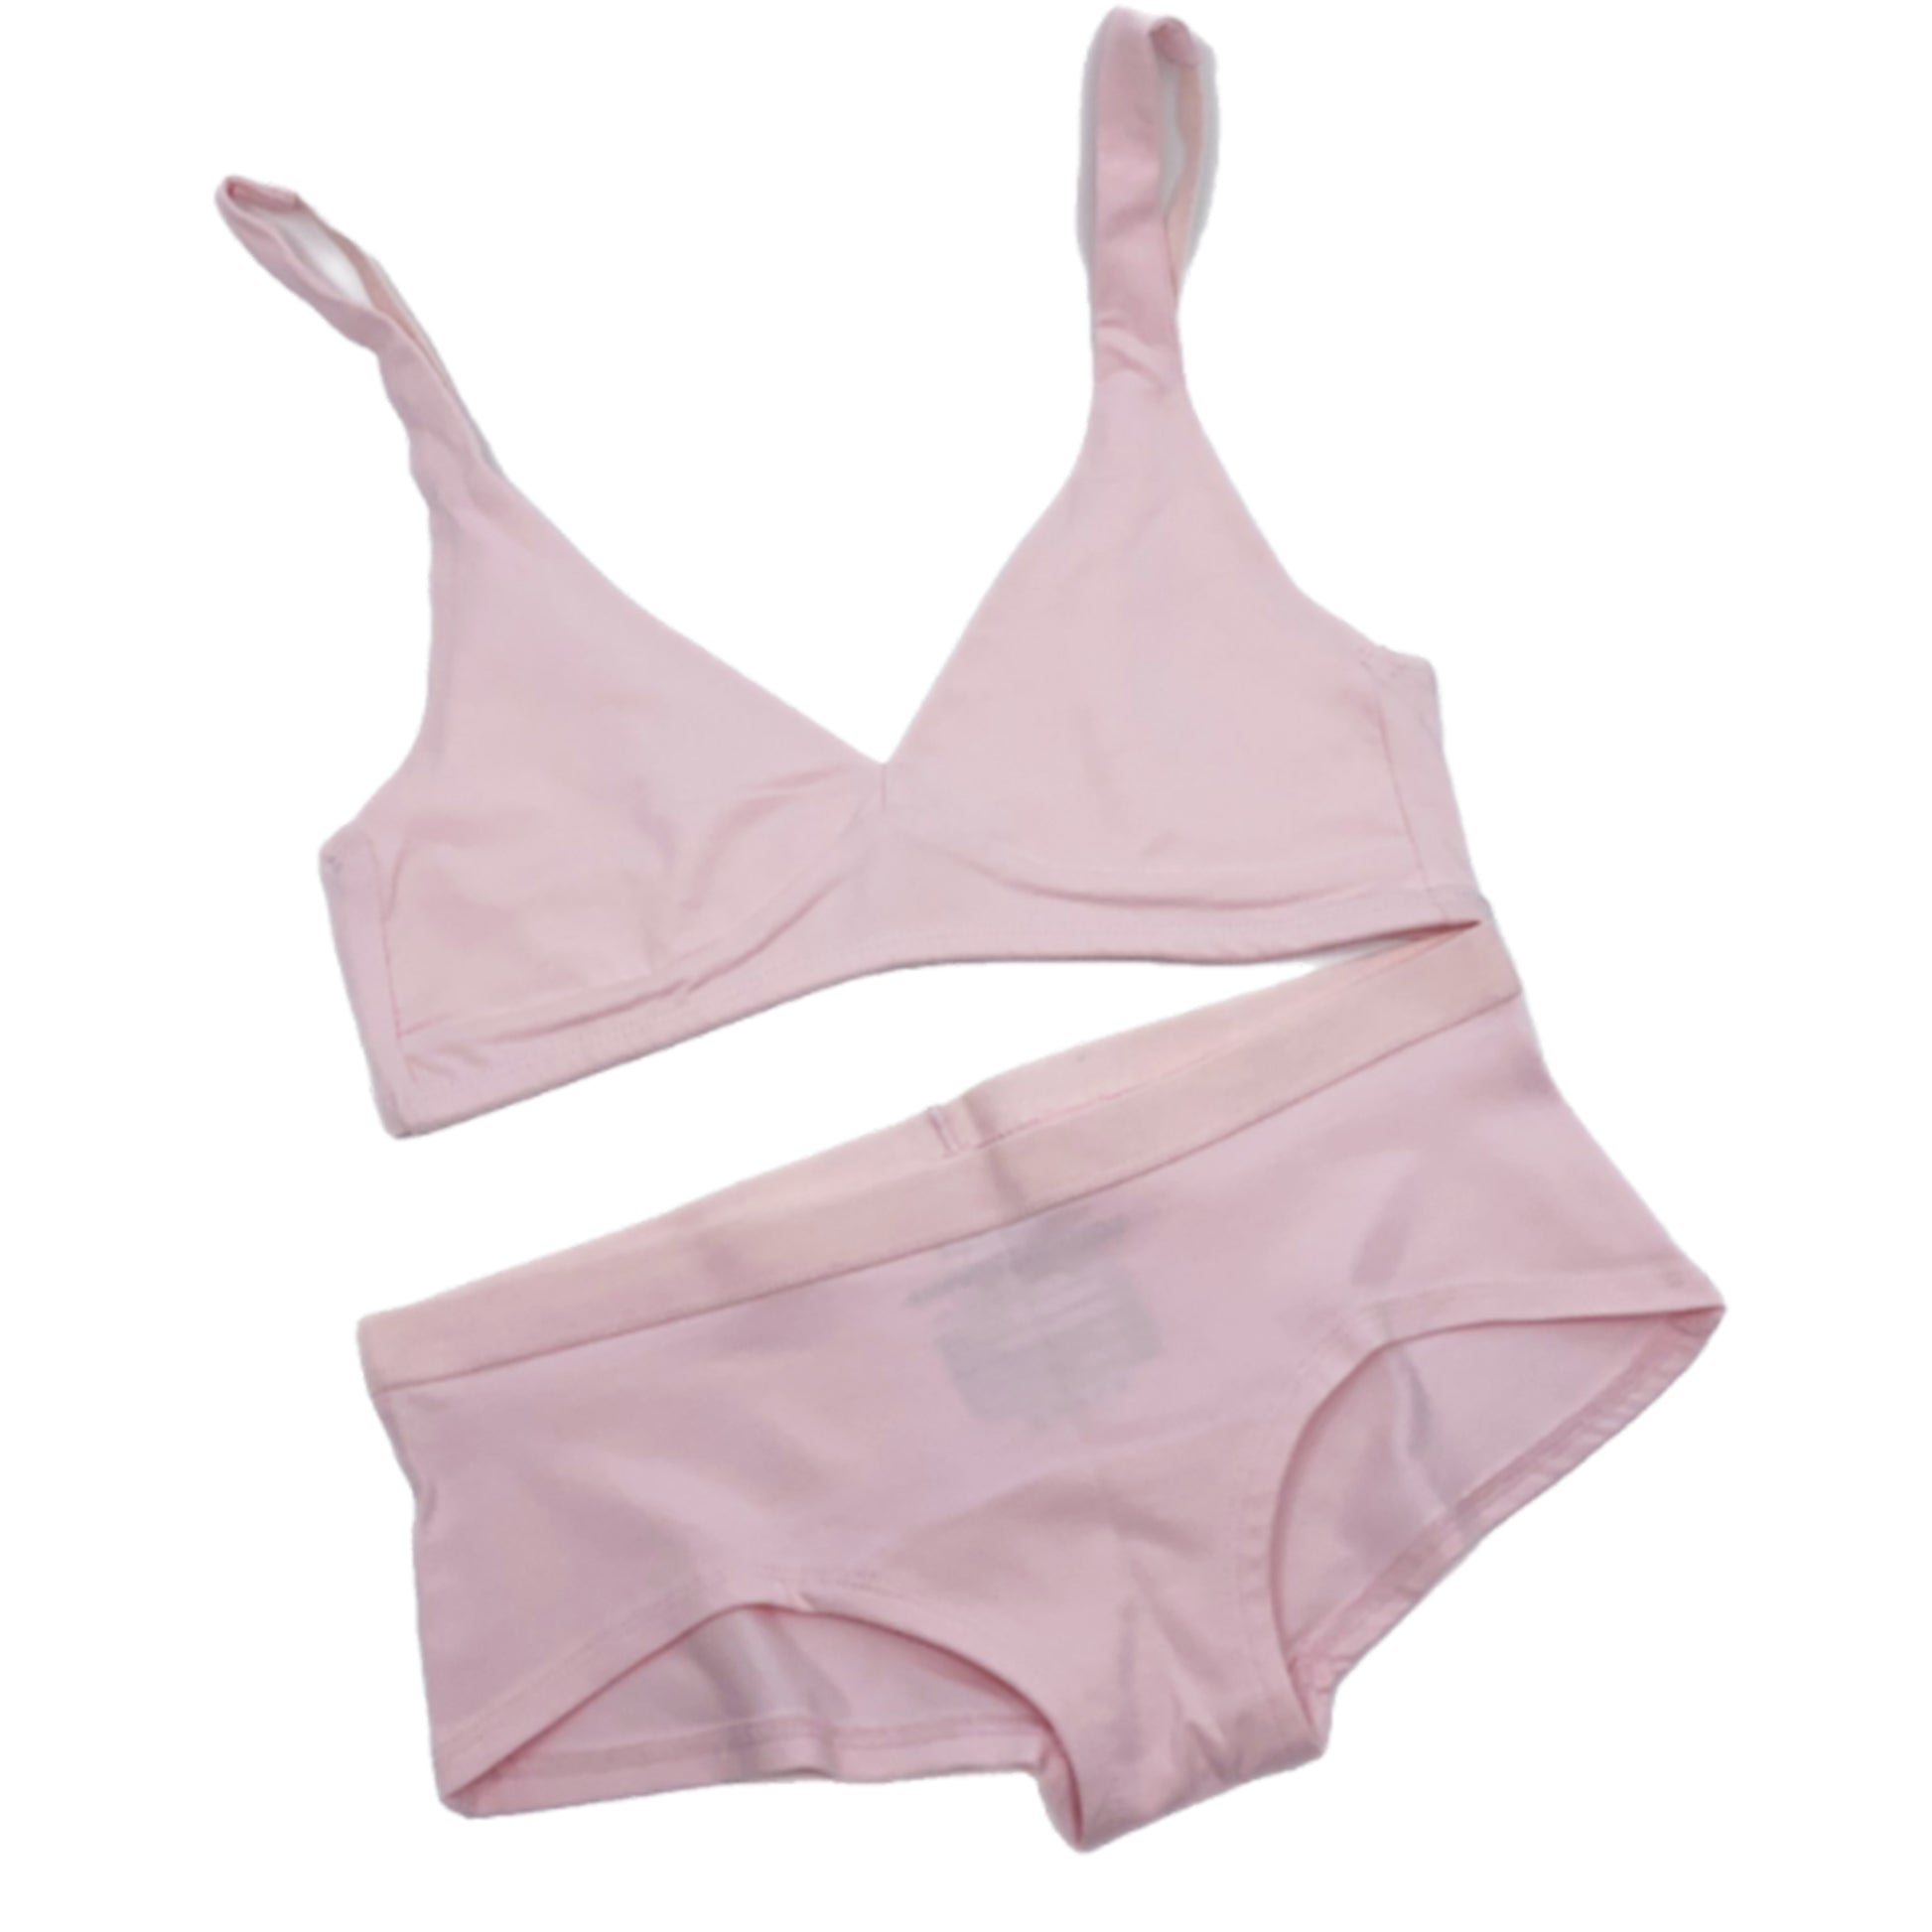 Women's organic cotton matching bralette and boy shorts set in light p –  Y.O.U underwear